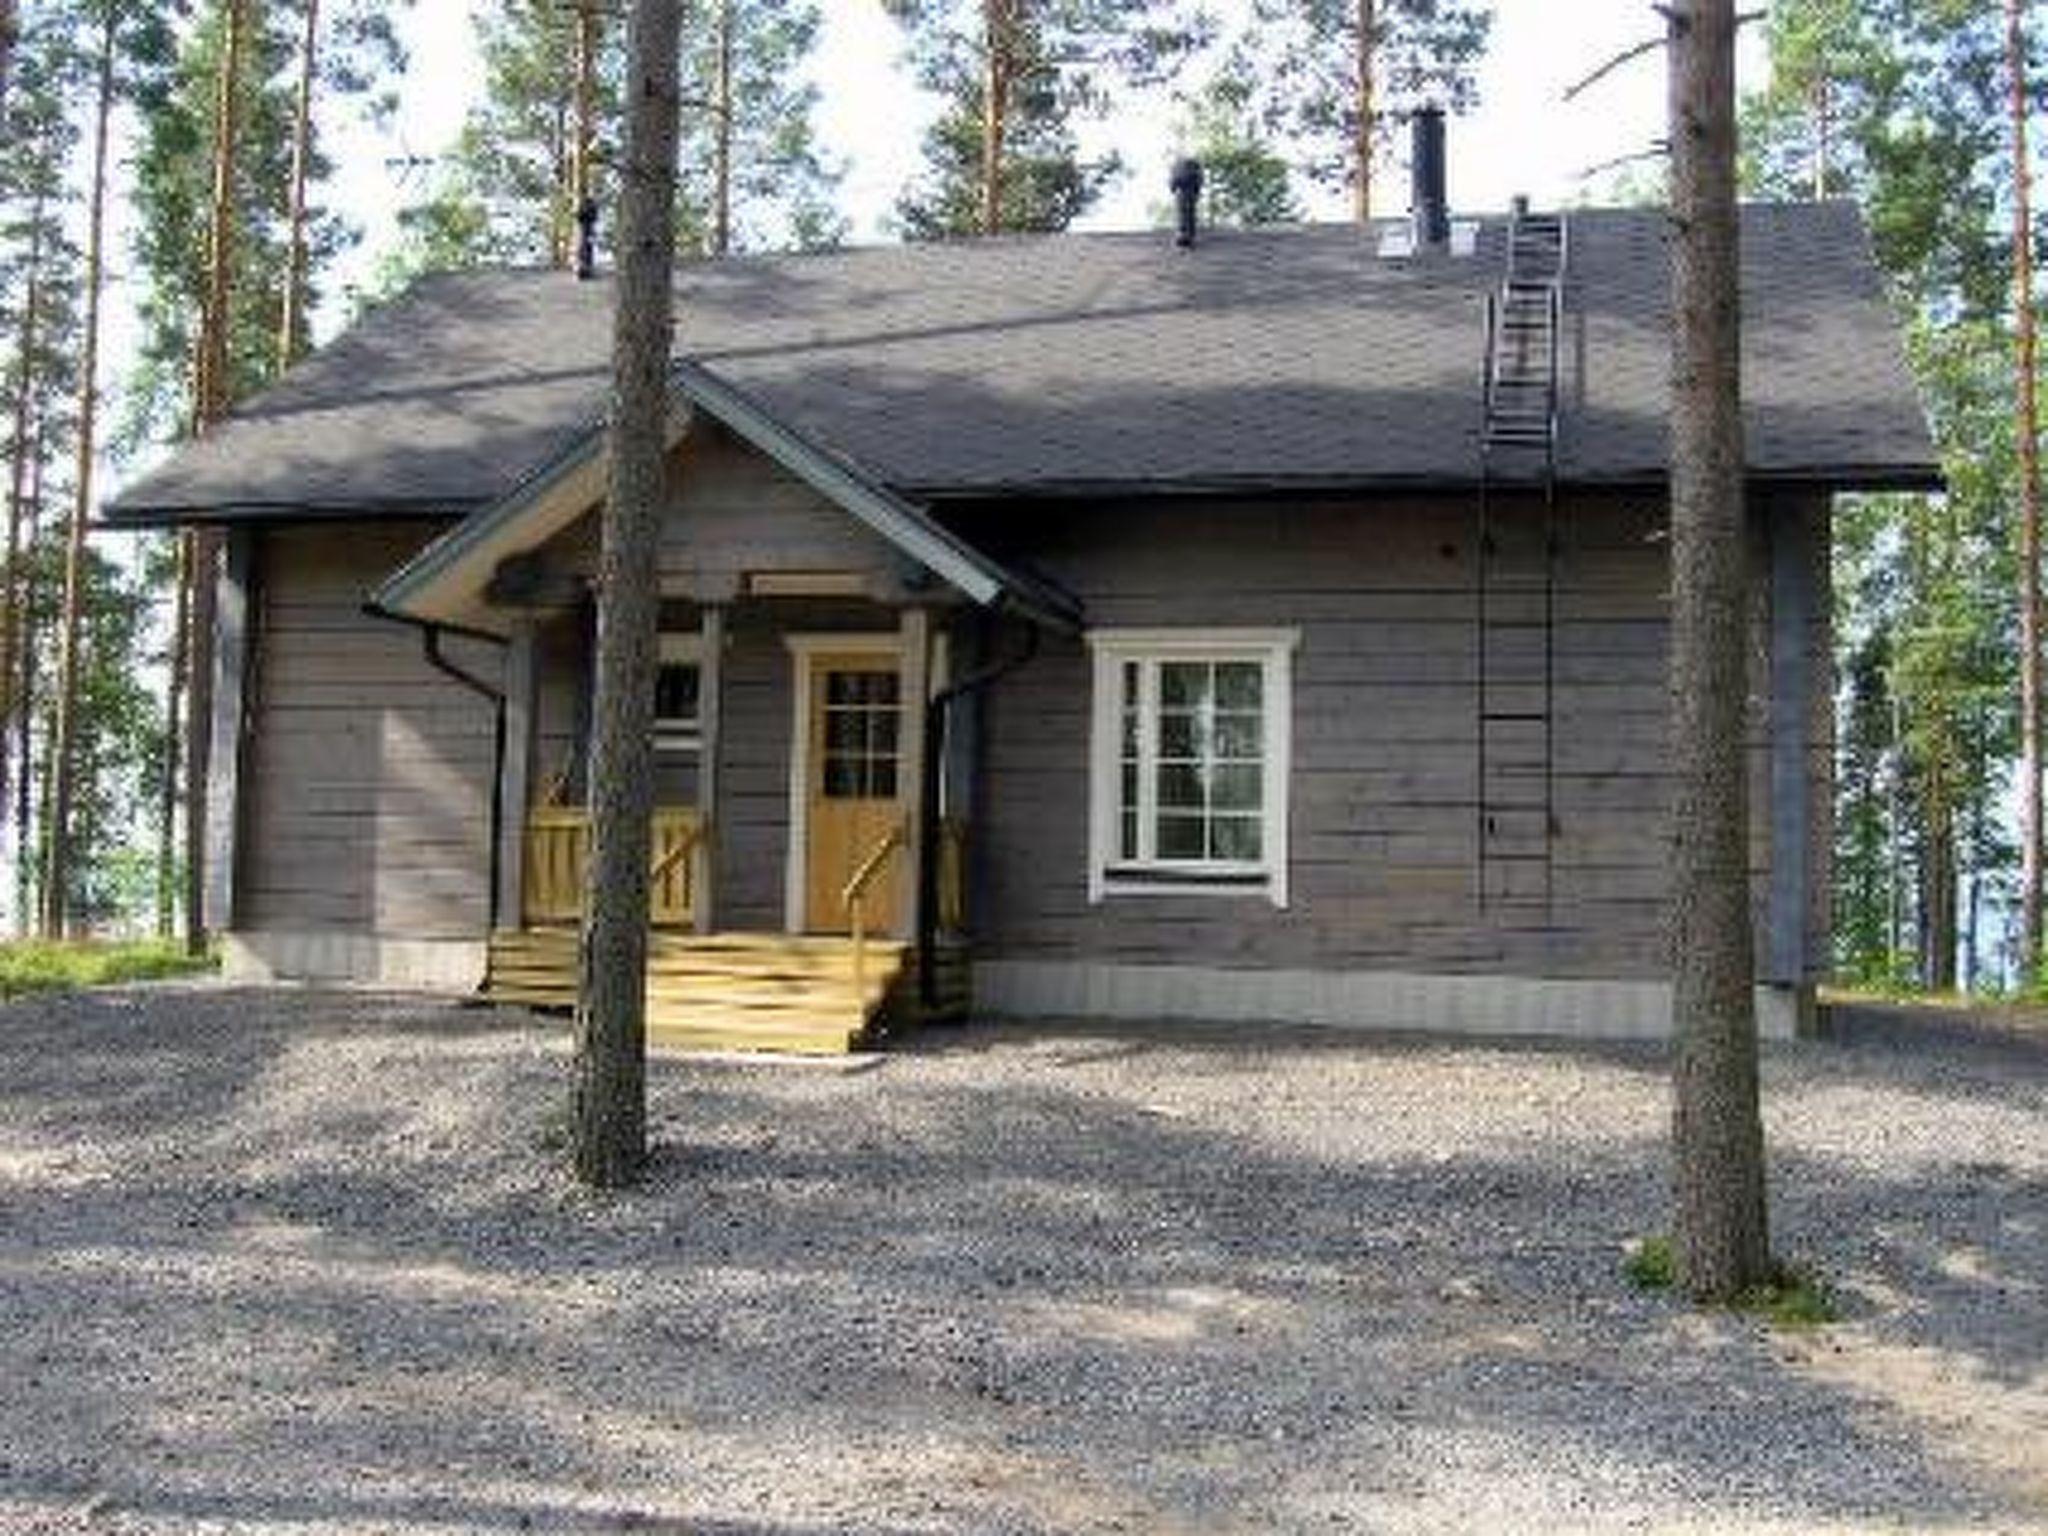 Photo 11 - 4 bedroom House in Lestijärvi with sauna